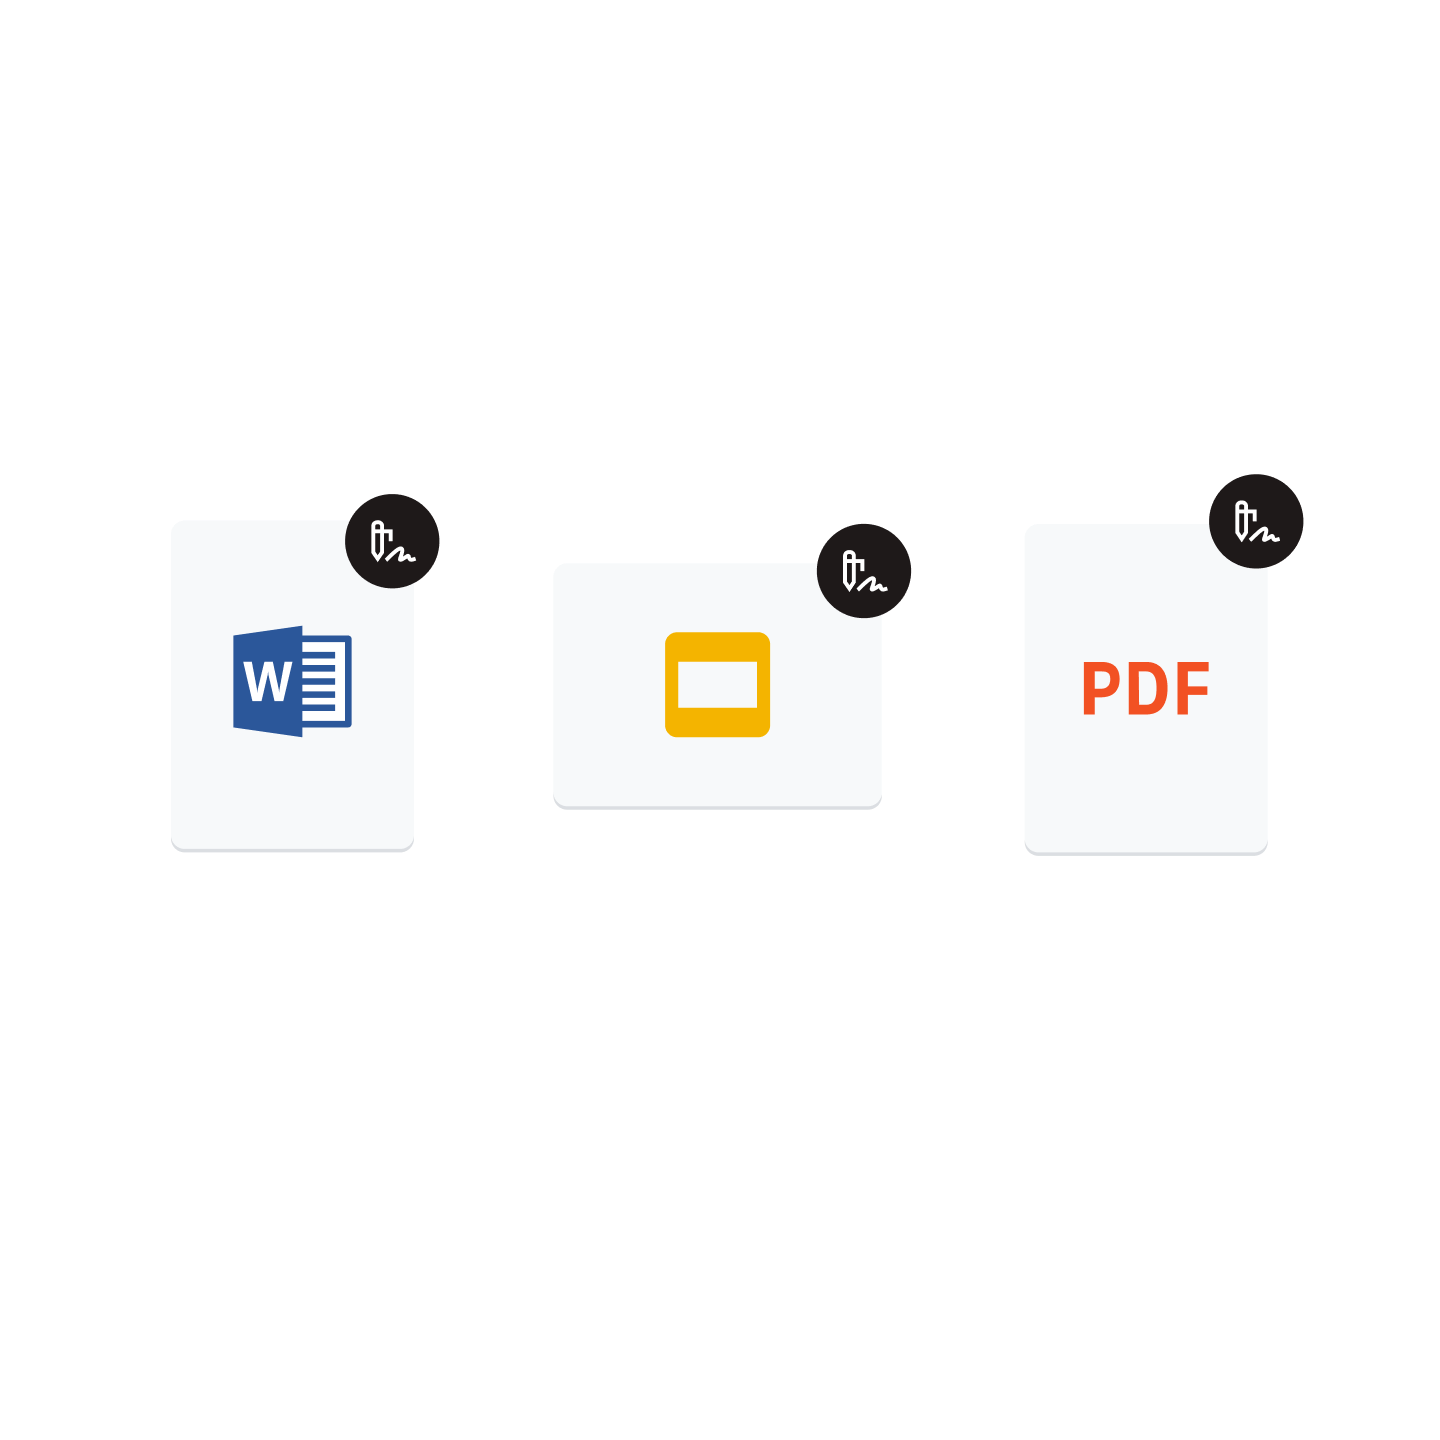 A Microsoft Word icon, a Google Slides icon and a PDF icon